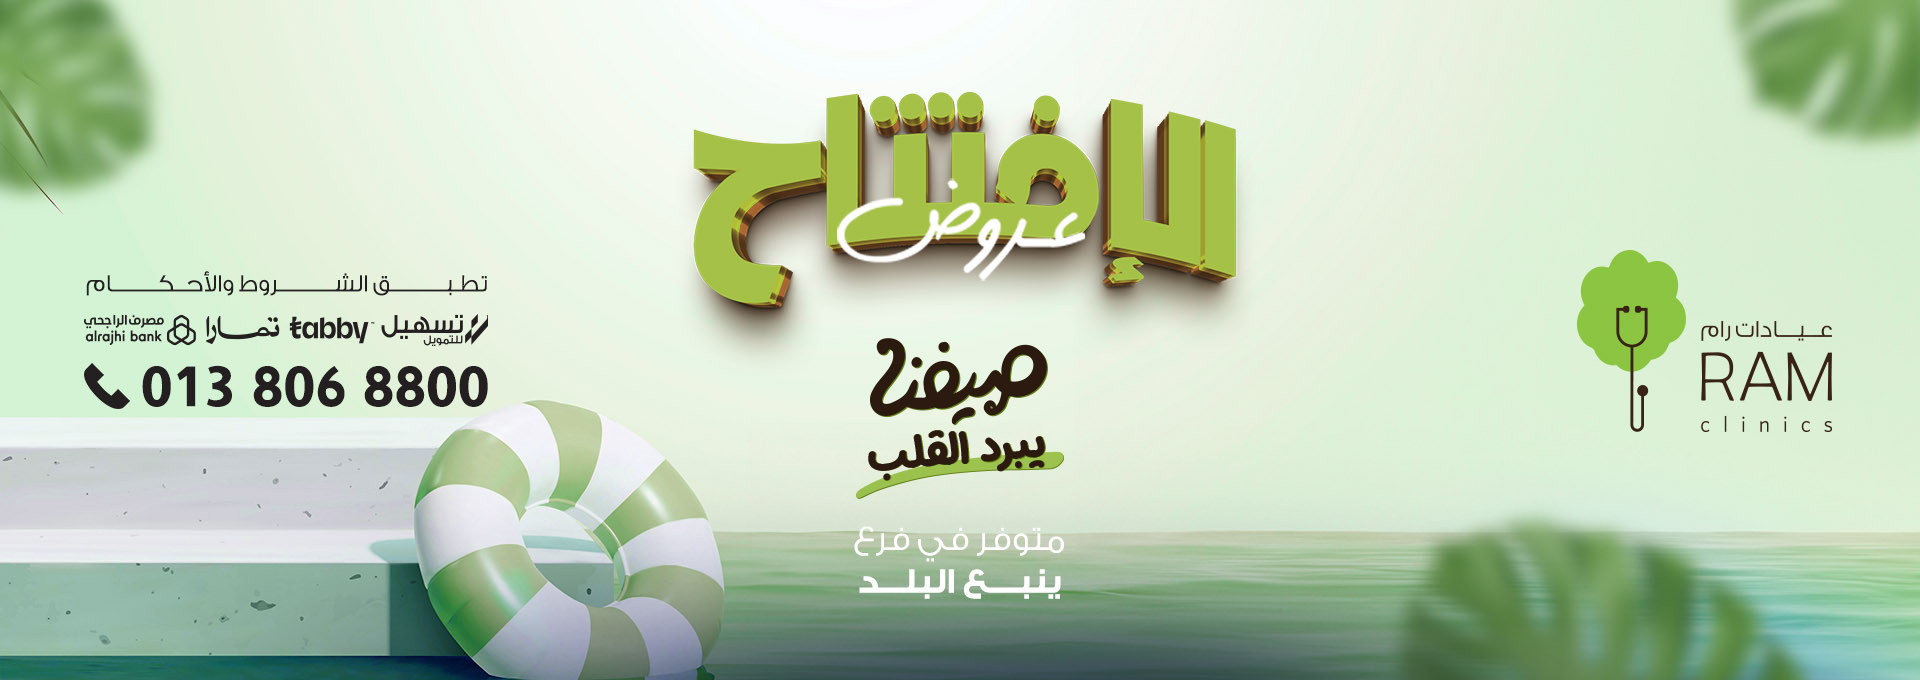 Opening offers - Yanbu Al-Balad branch